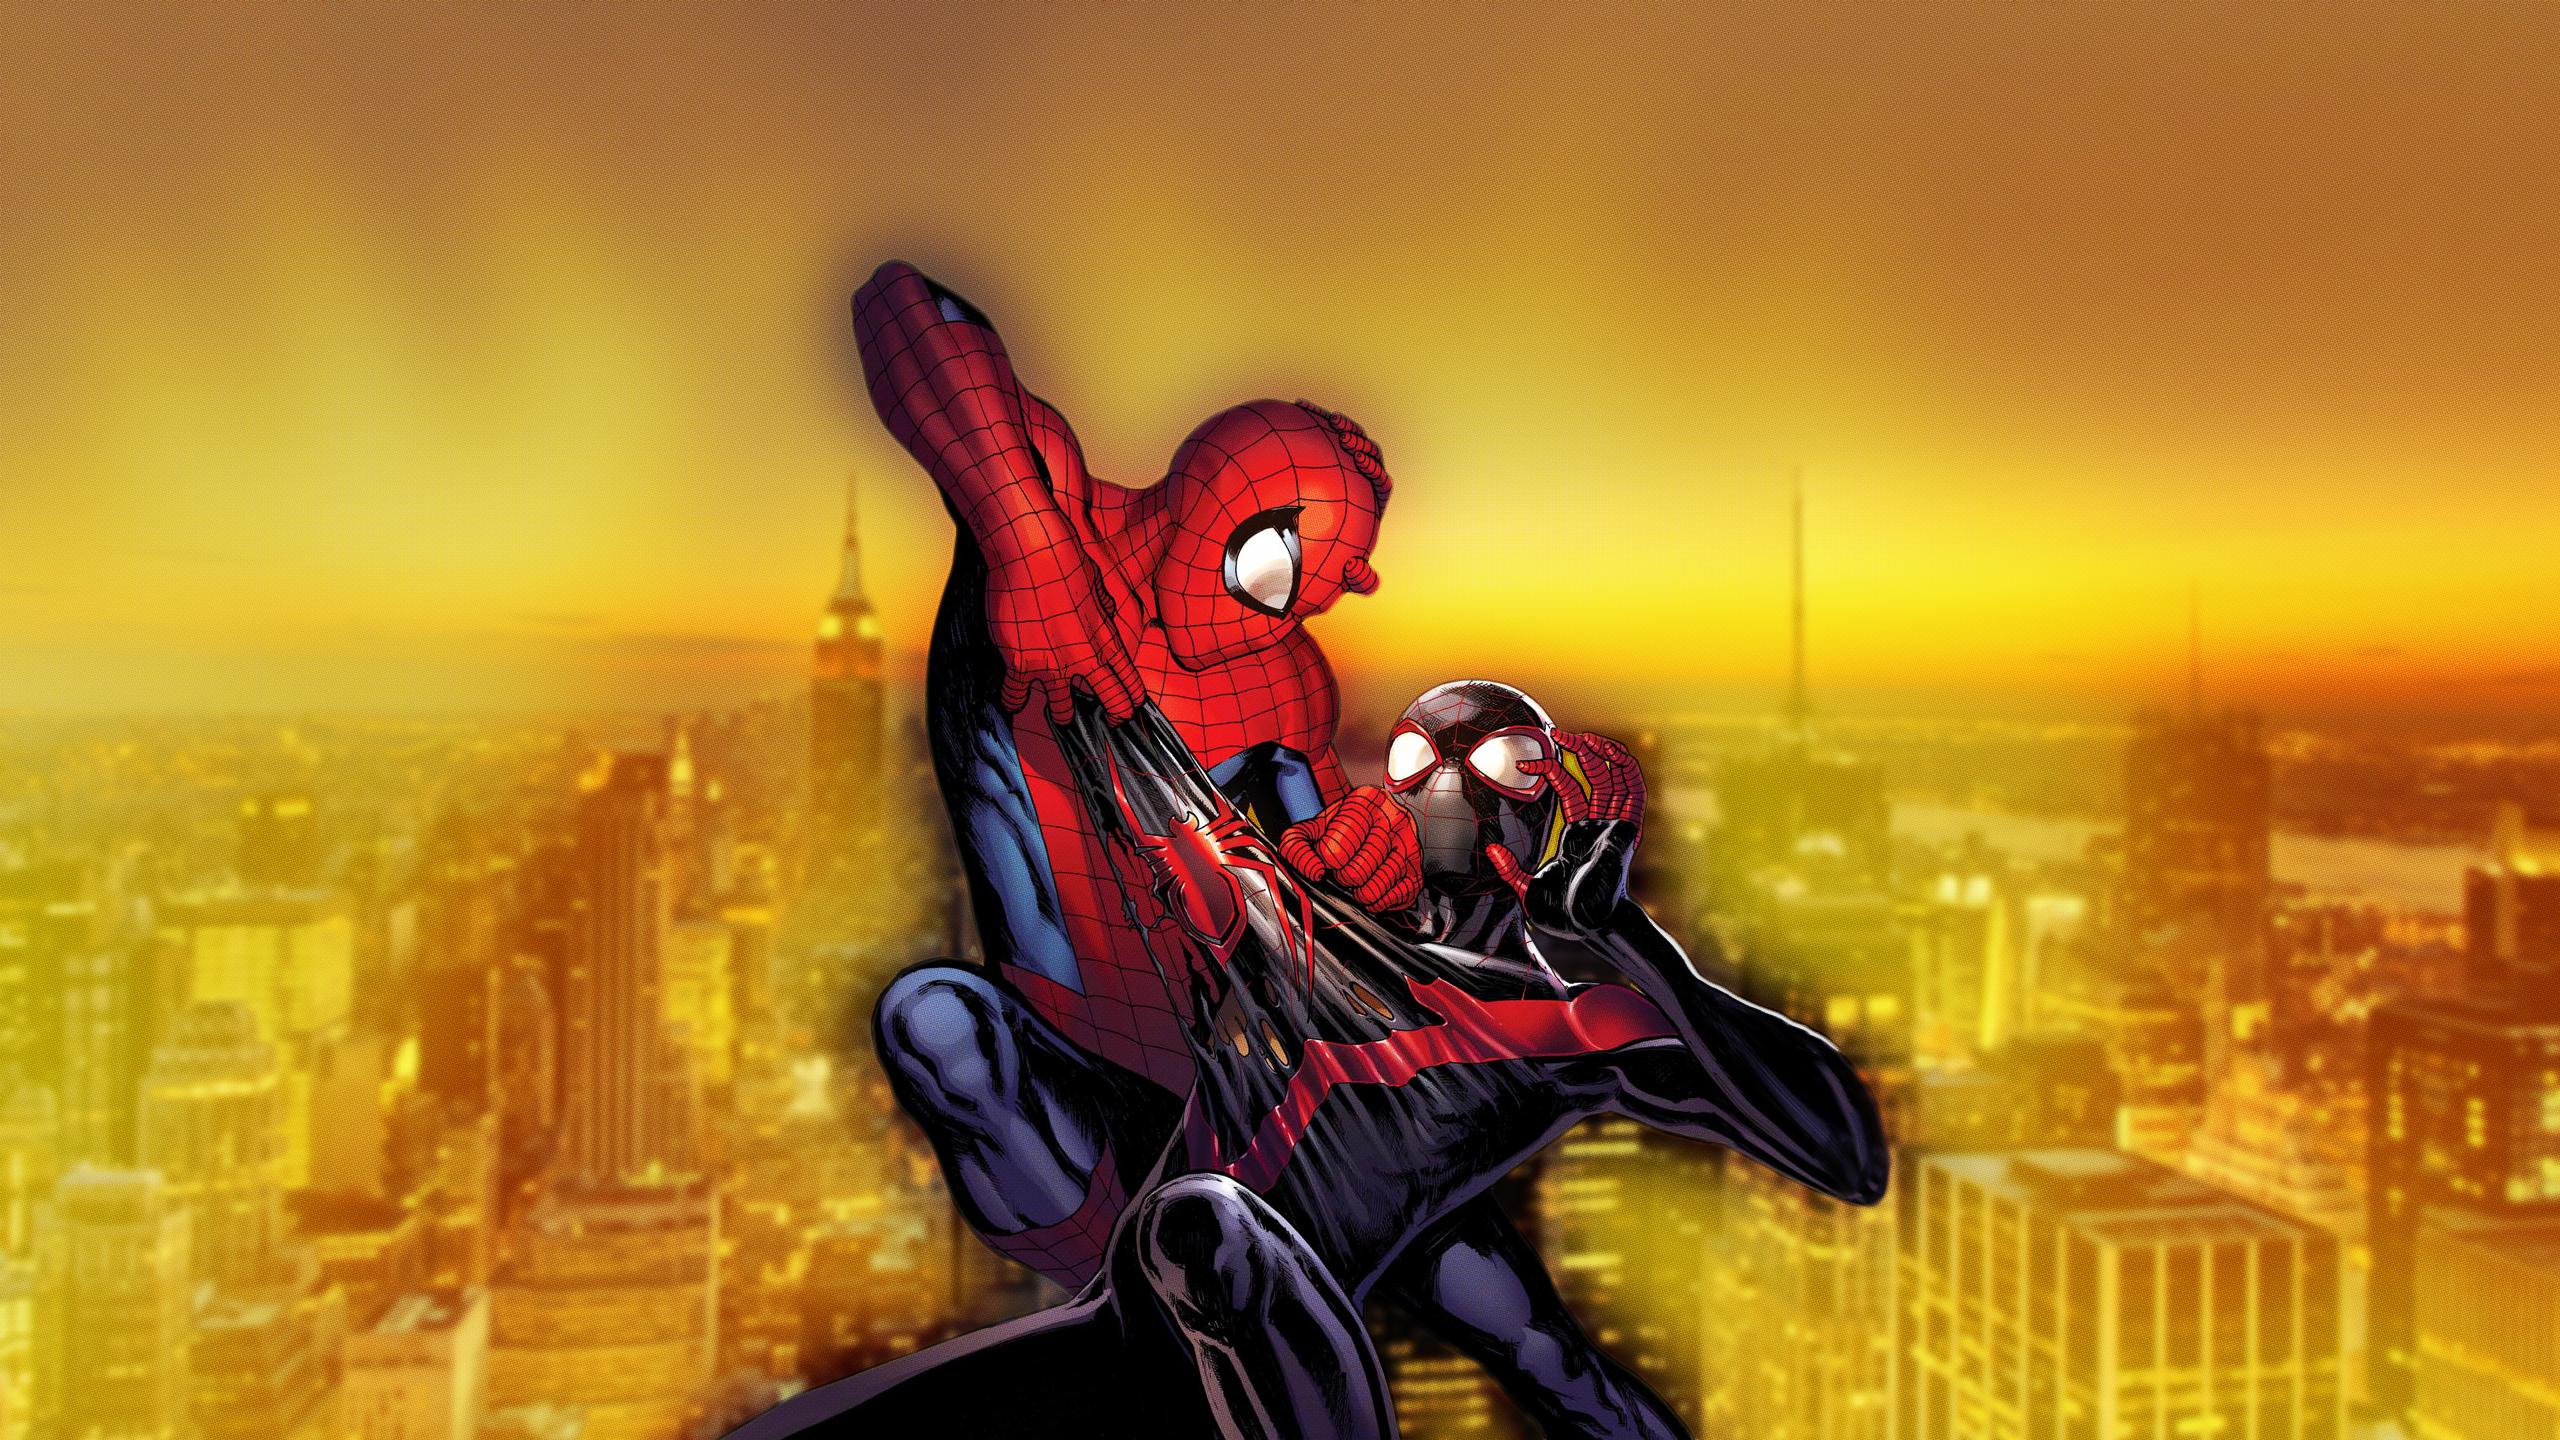 1440p Spiderman Wallpaper 1080p In Ments